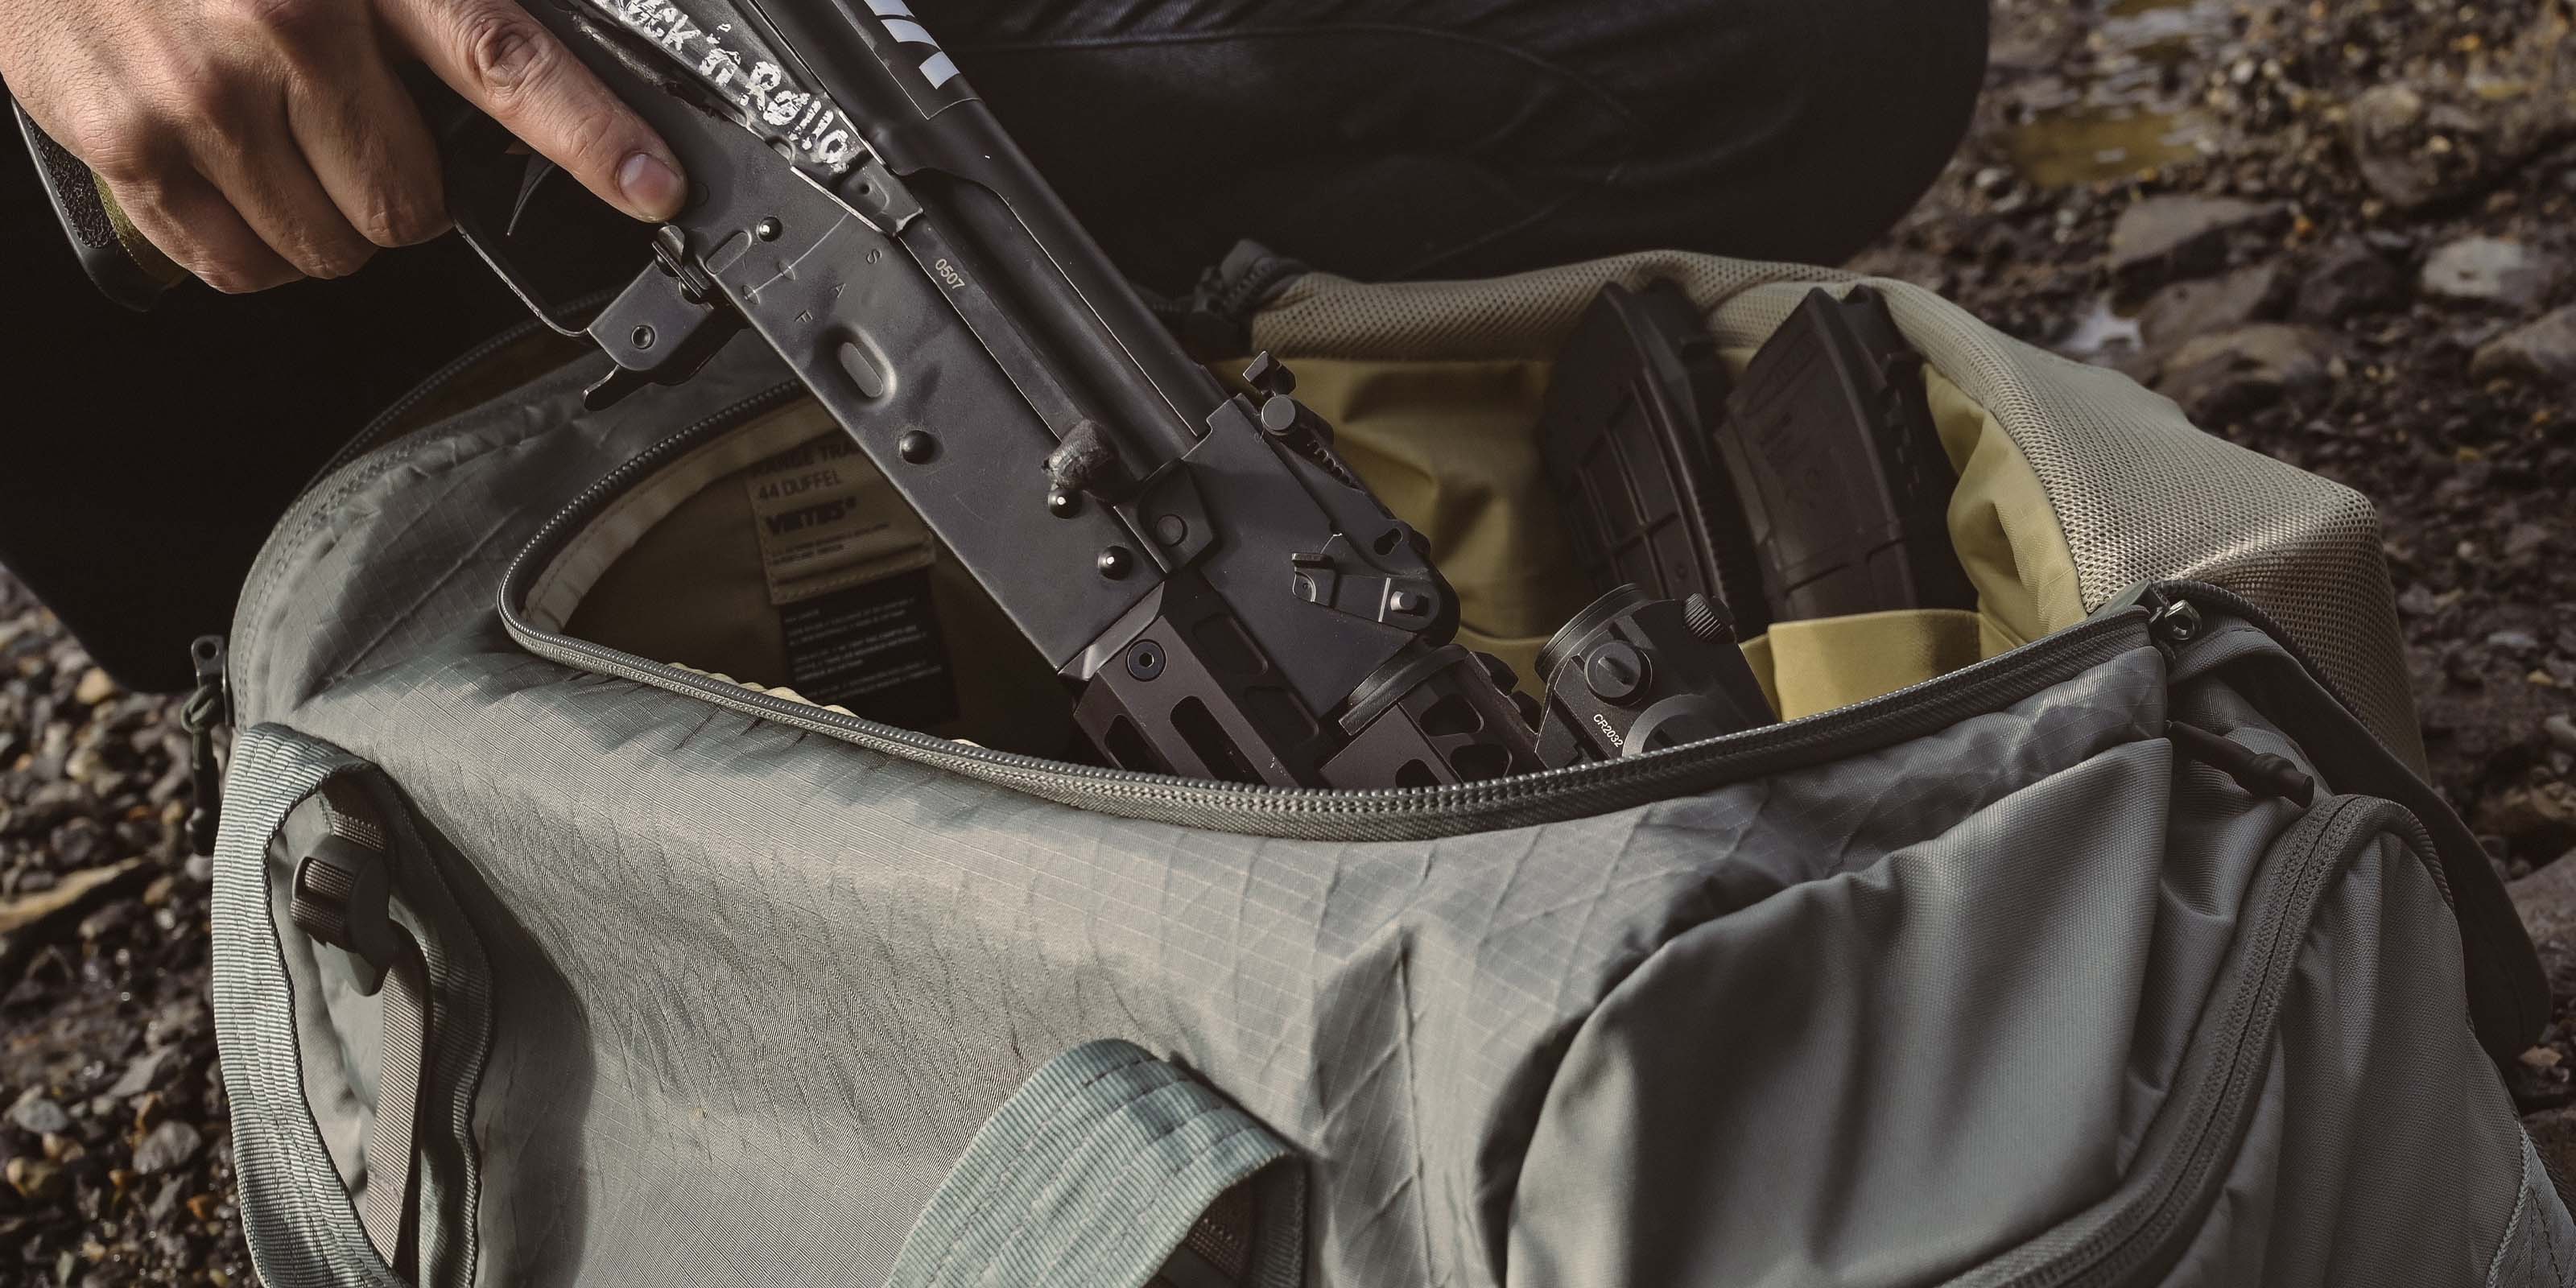 GRITR Tactical Duffle Range Bag